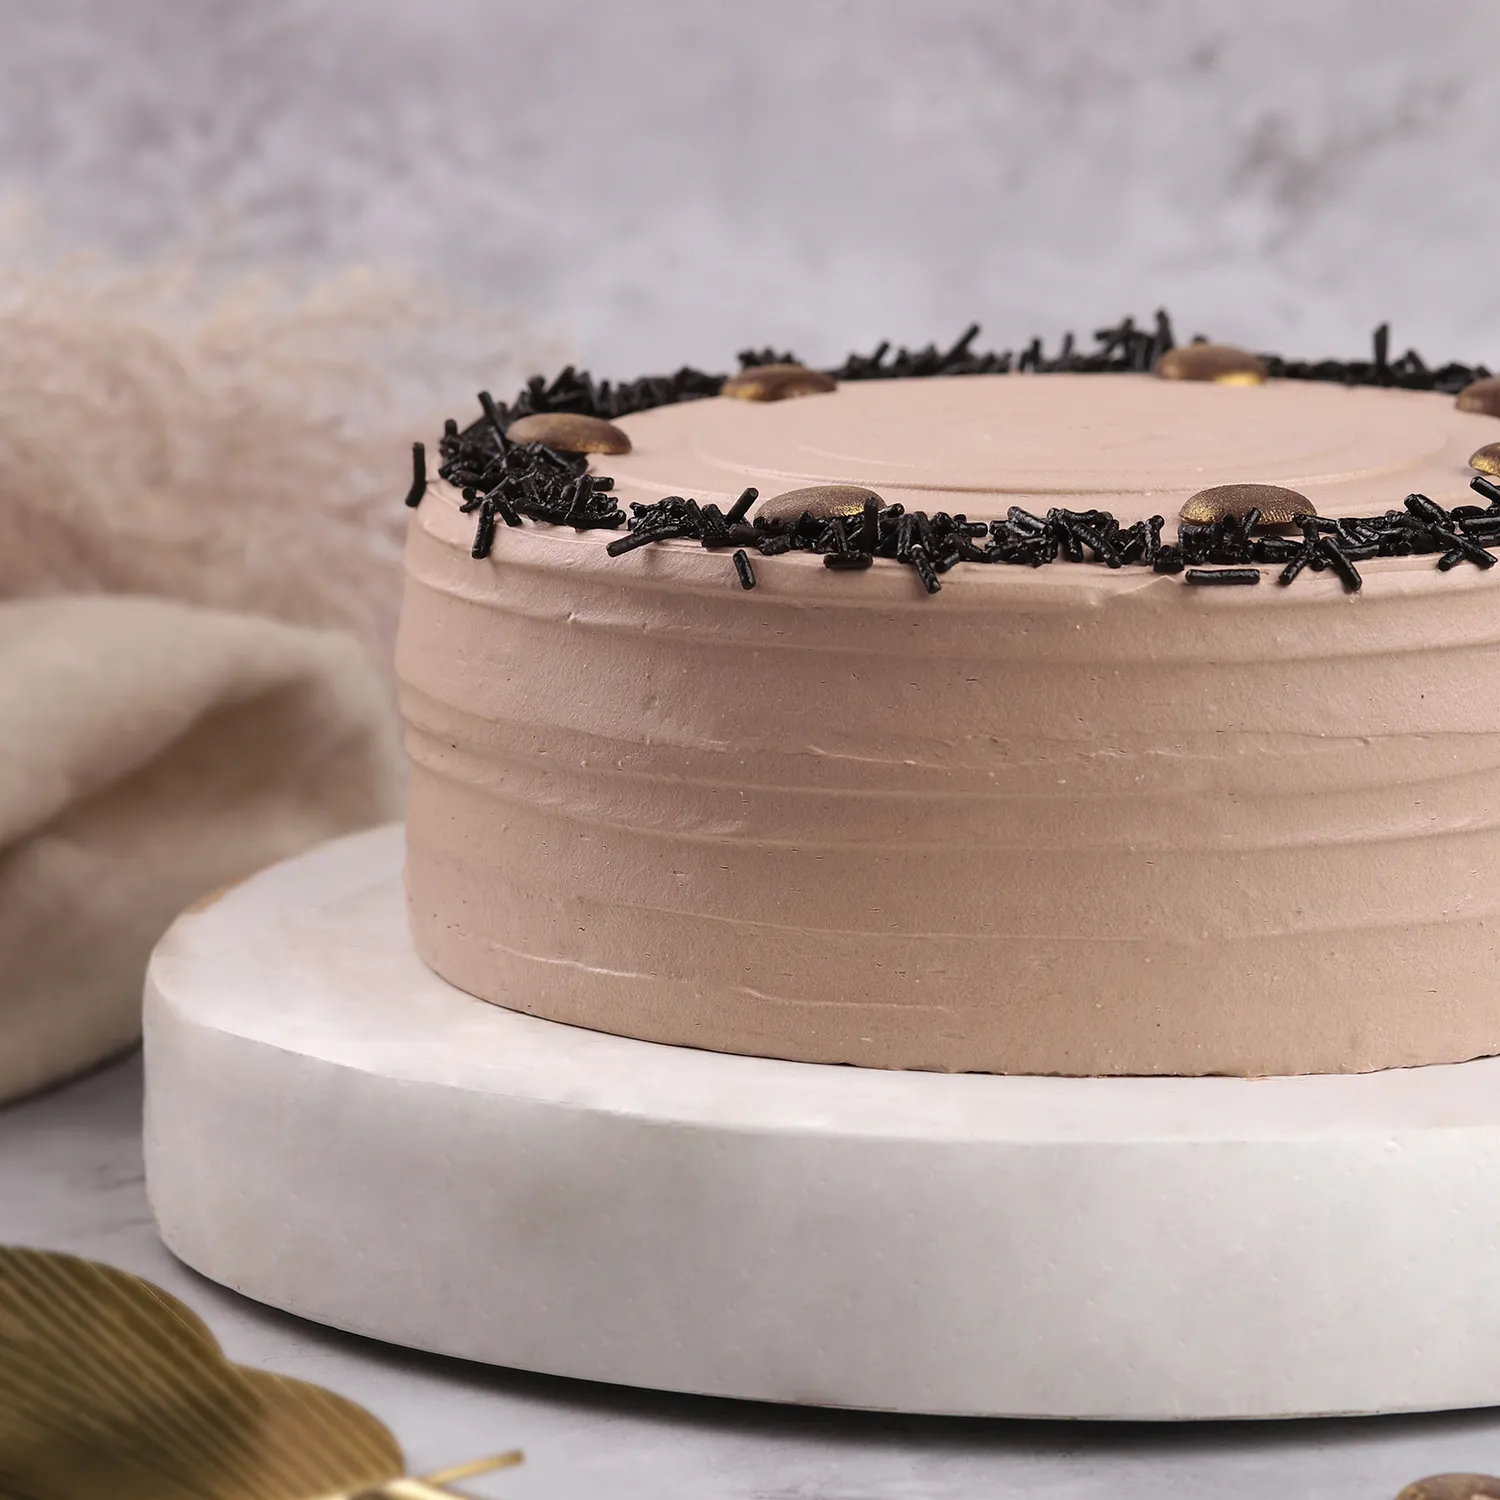 Heavenly Chocolate Sensation Cake - 2 KG